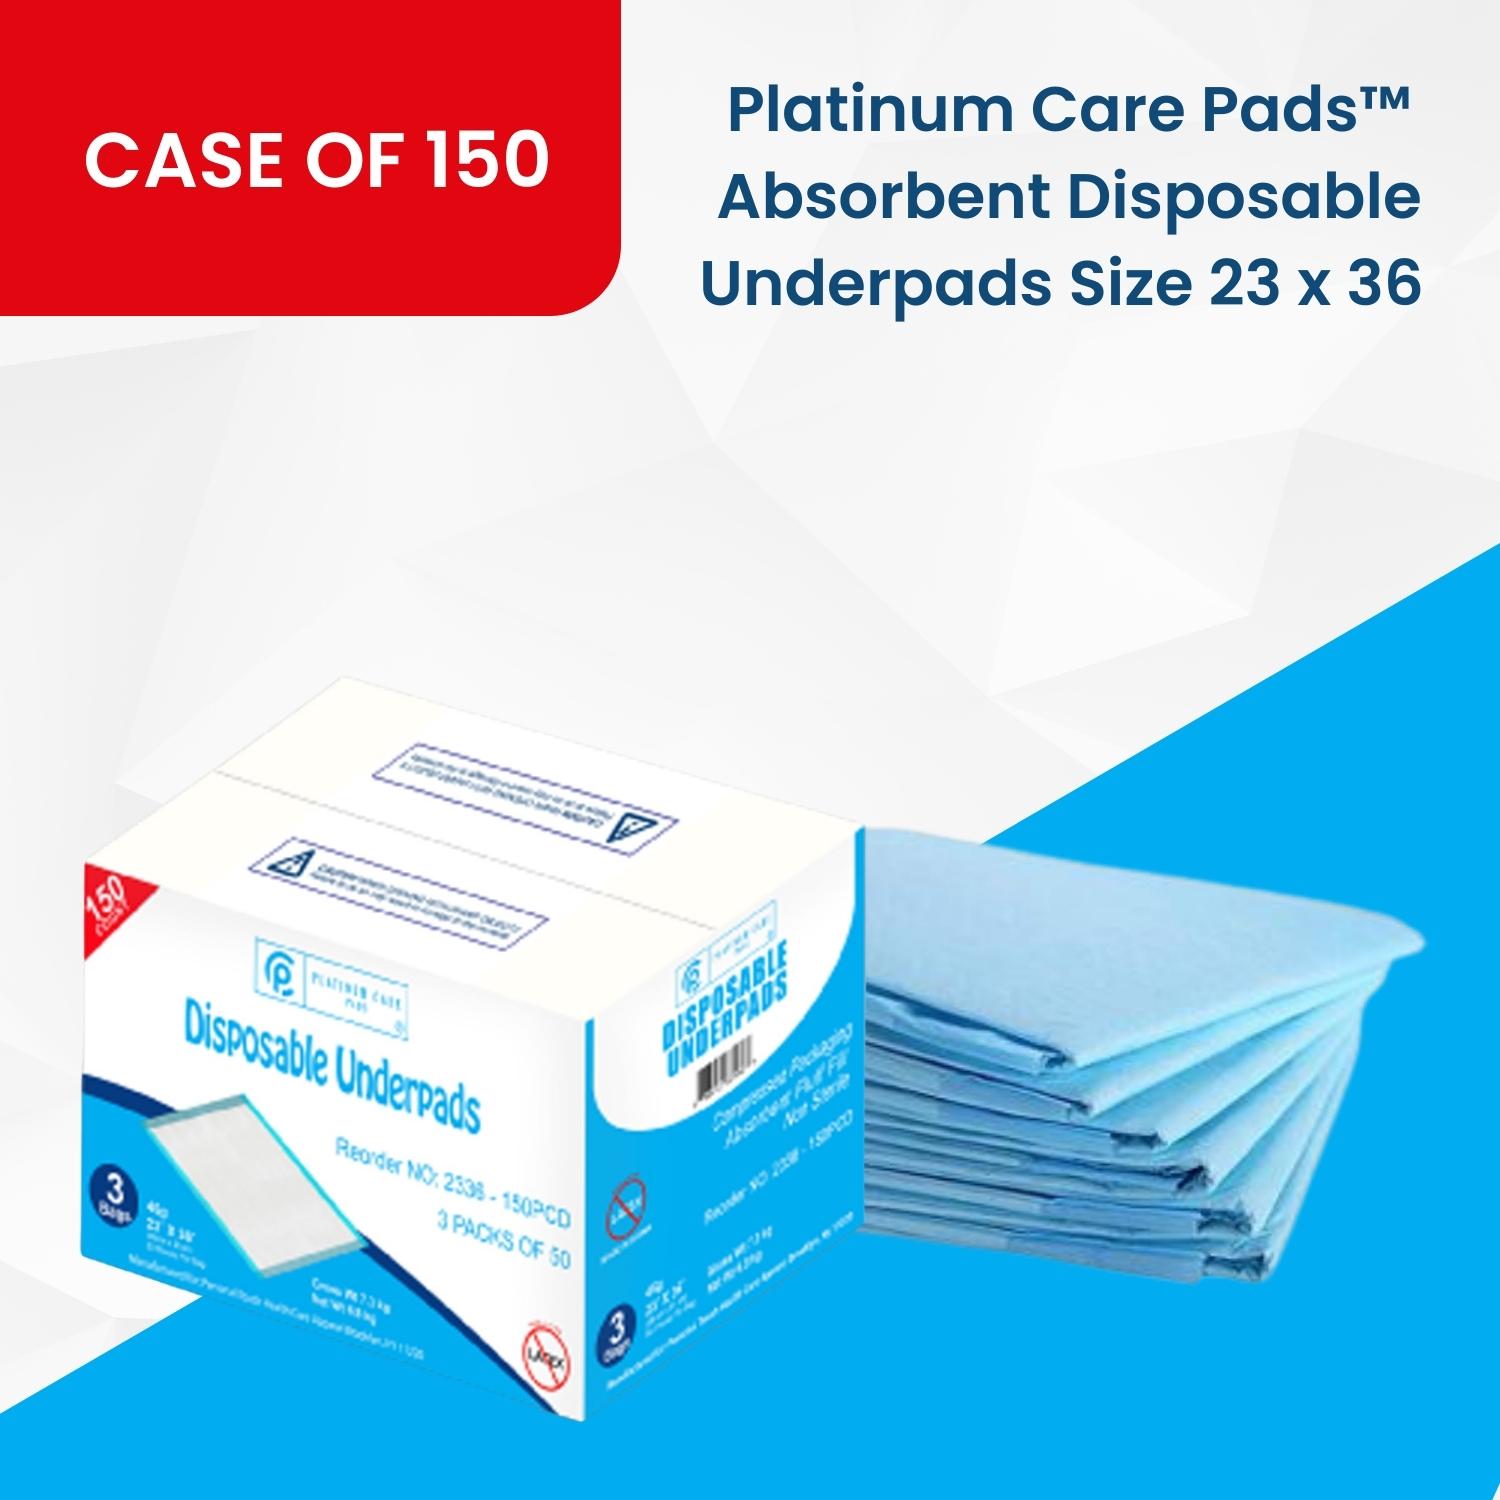 Platinum Care Pads™ Absorbent Disposable Underpads Size 23 x 36 (150/case)